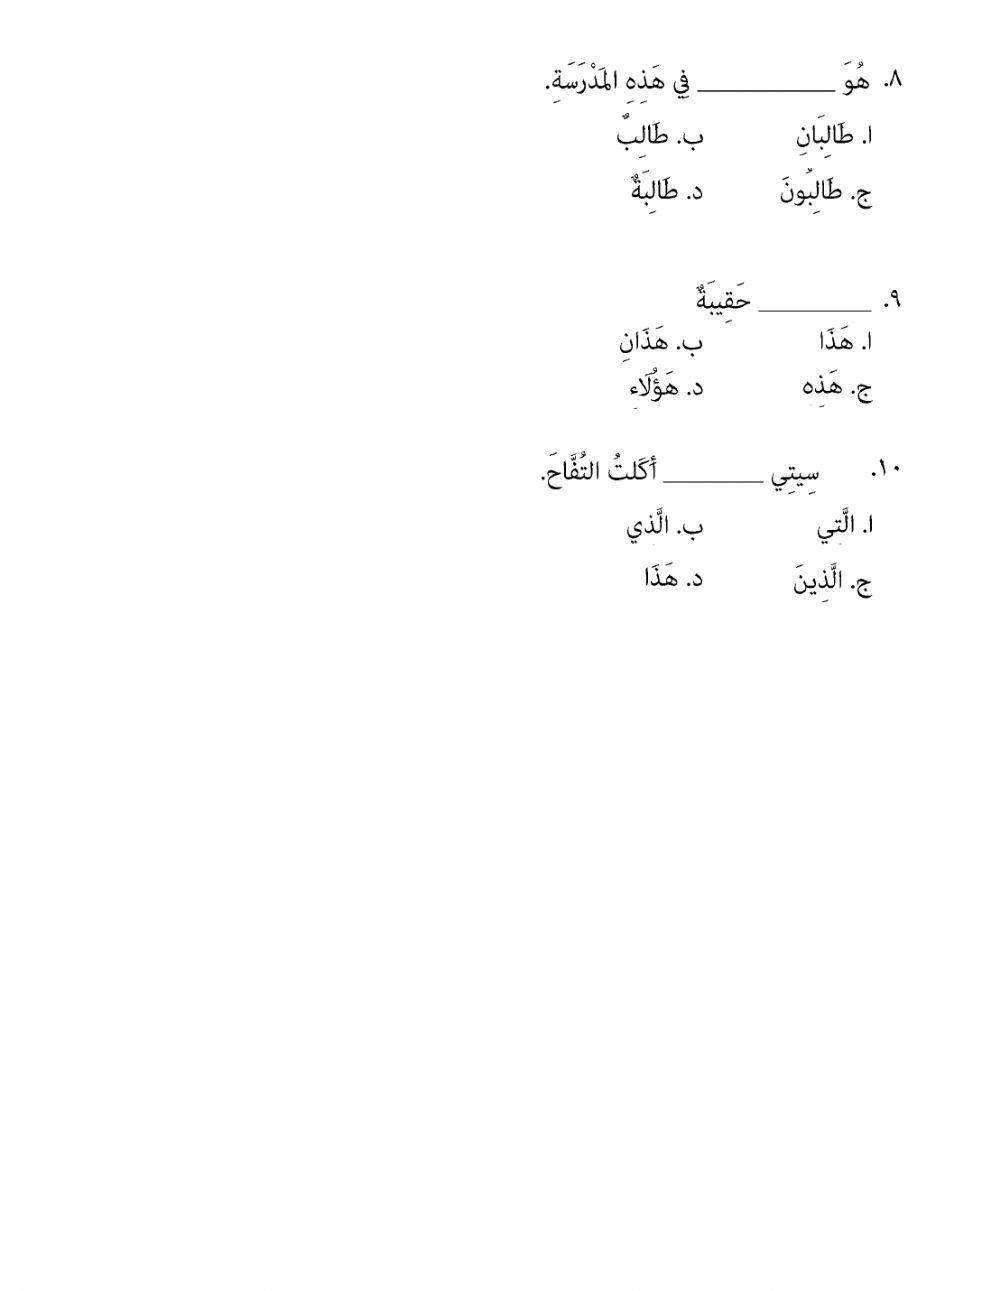 Lughatul Quran T4 LPAT 1